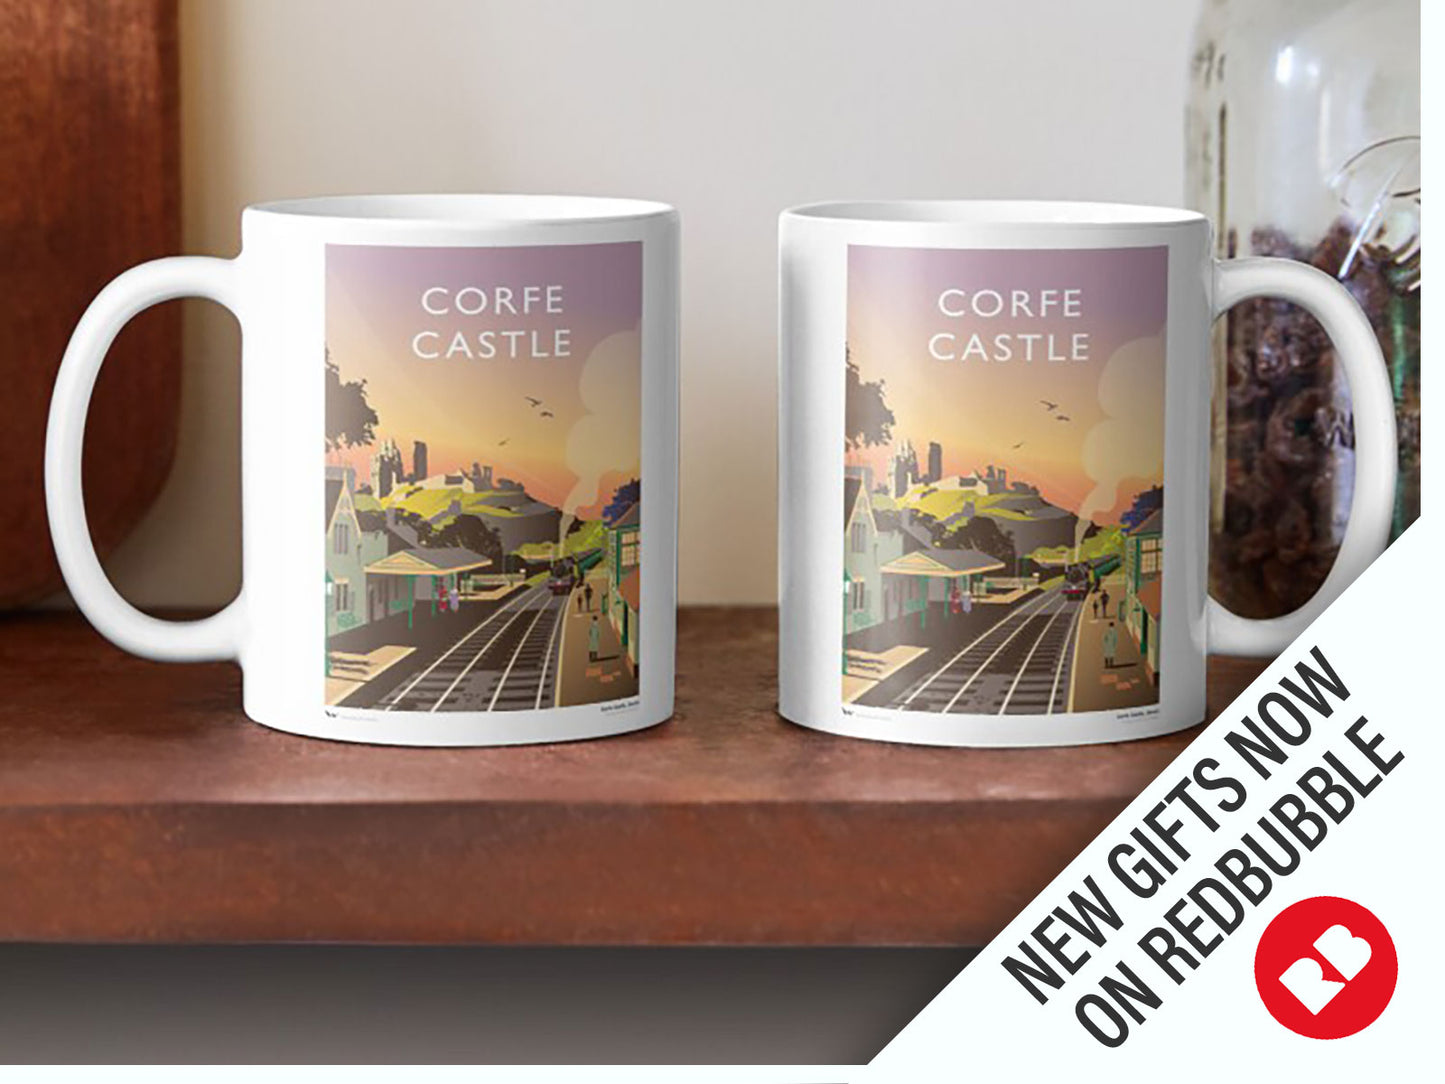 Corfe Castle Mugs for Tea, Coffee, Hot Chocolate